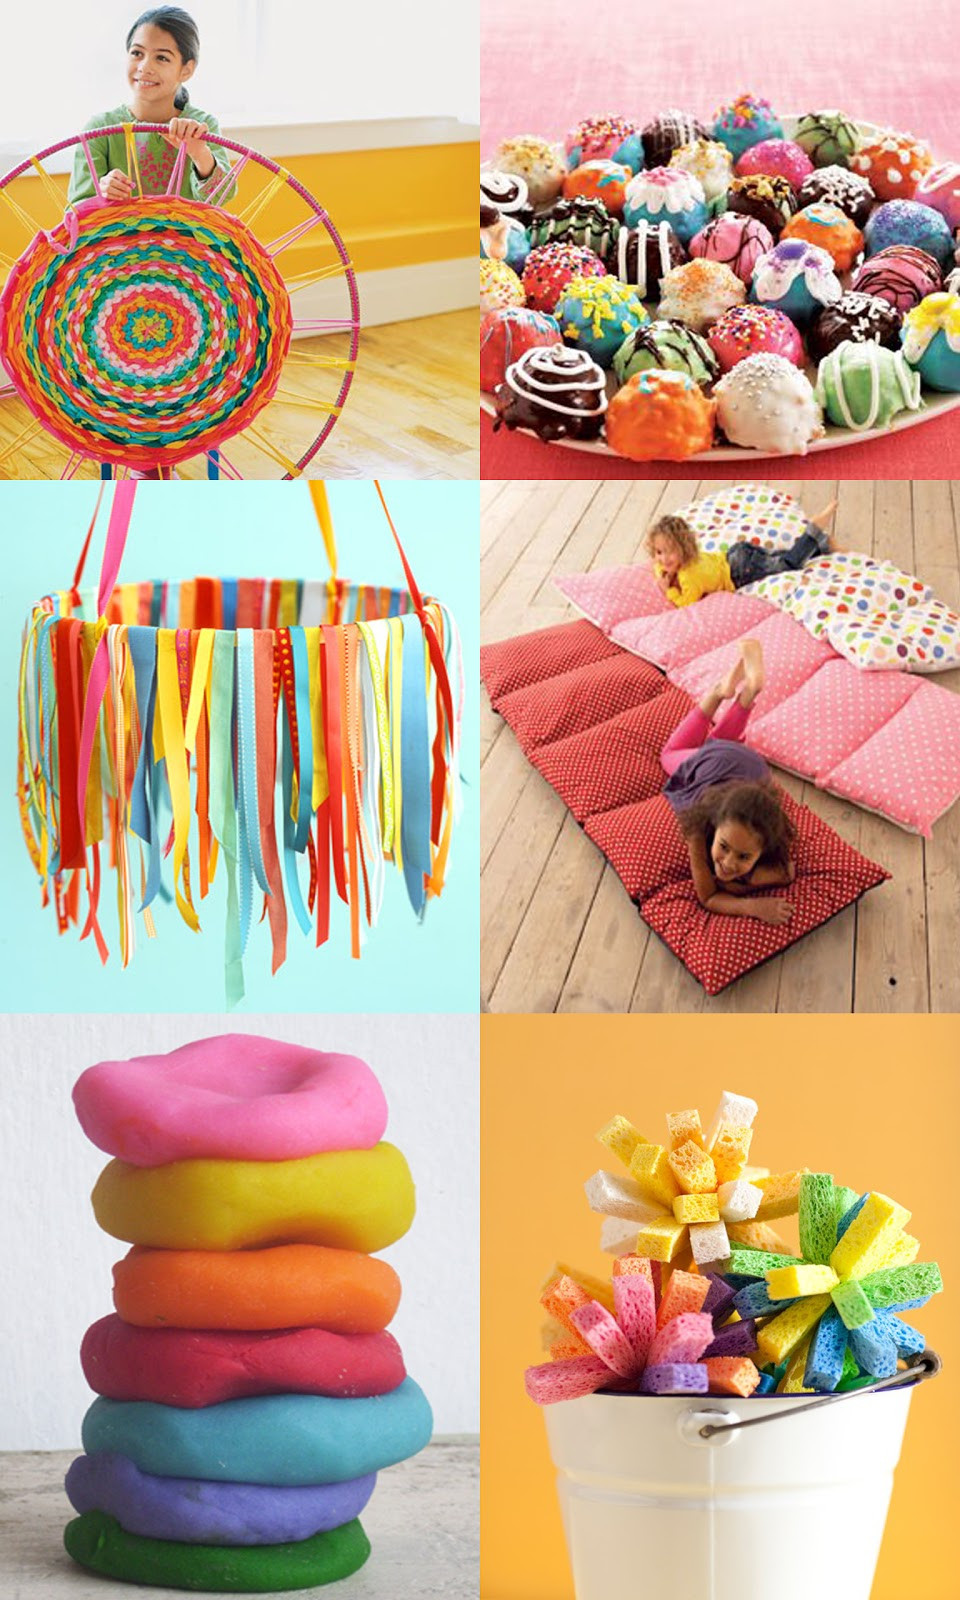 Best ideas about Fun Adult Crafts
. Save or Pin WONDER WREN Super cute Summer Crafts Now.